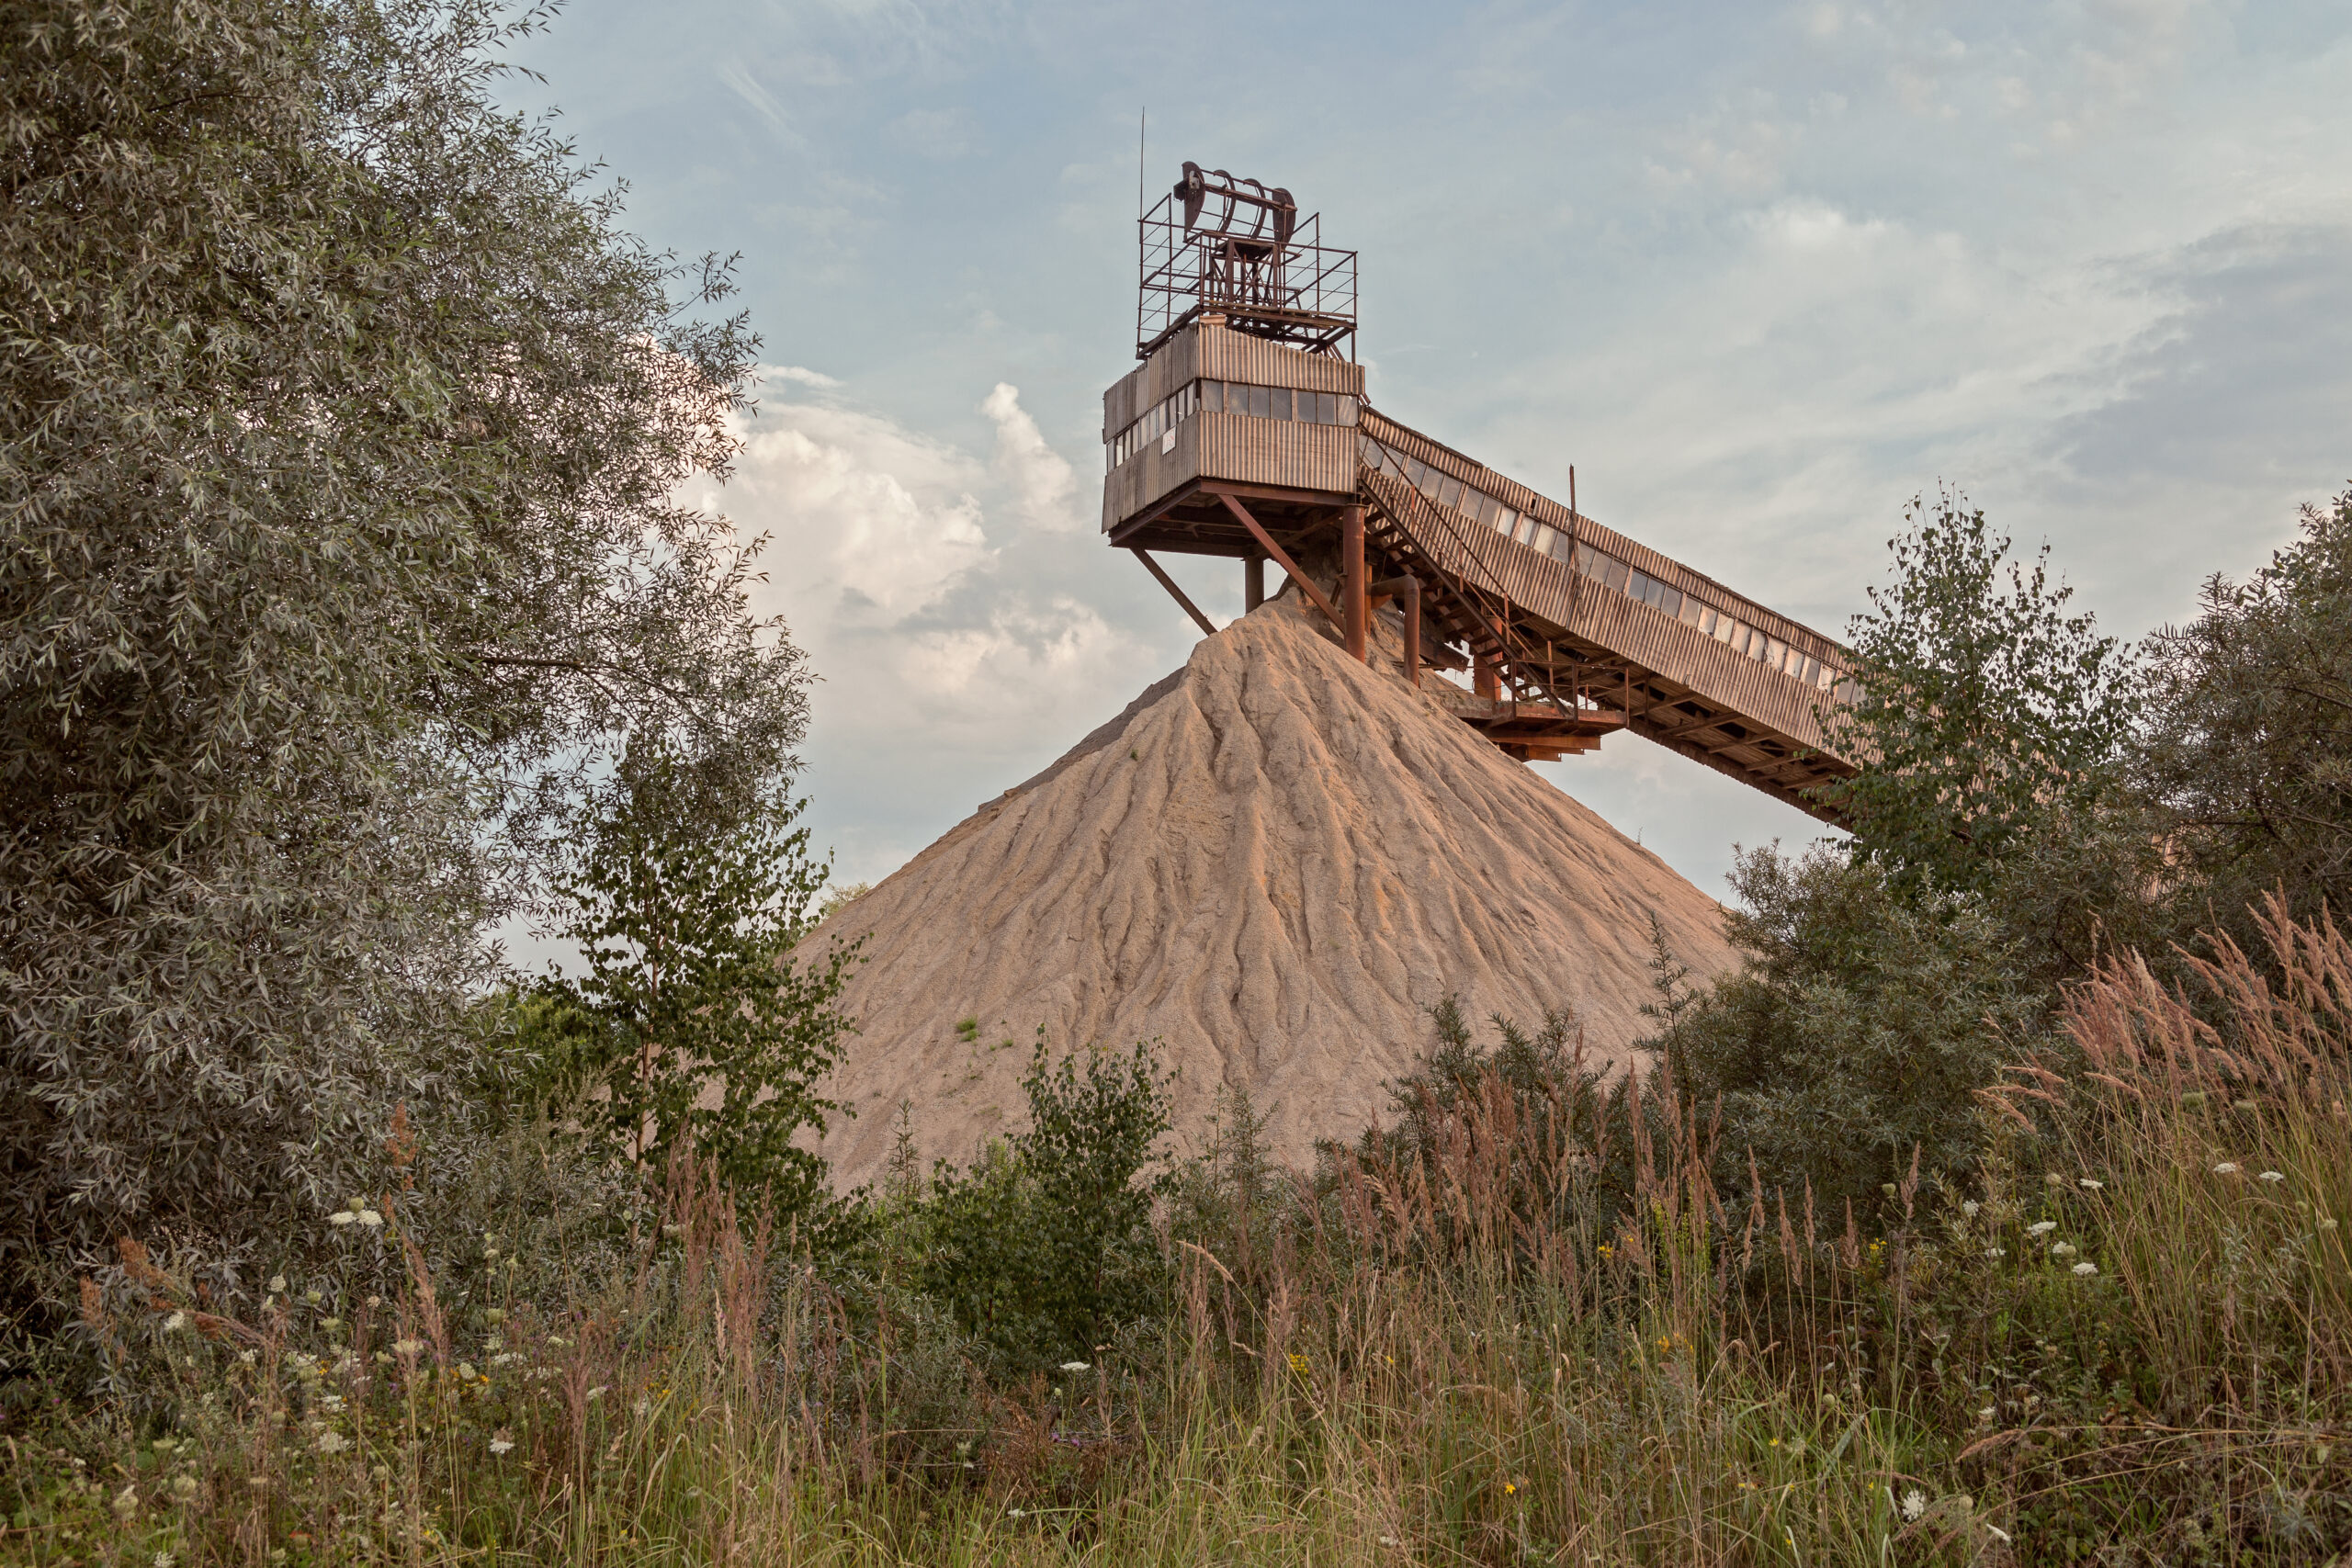 Ukmergės versmė quarry, 2015